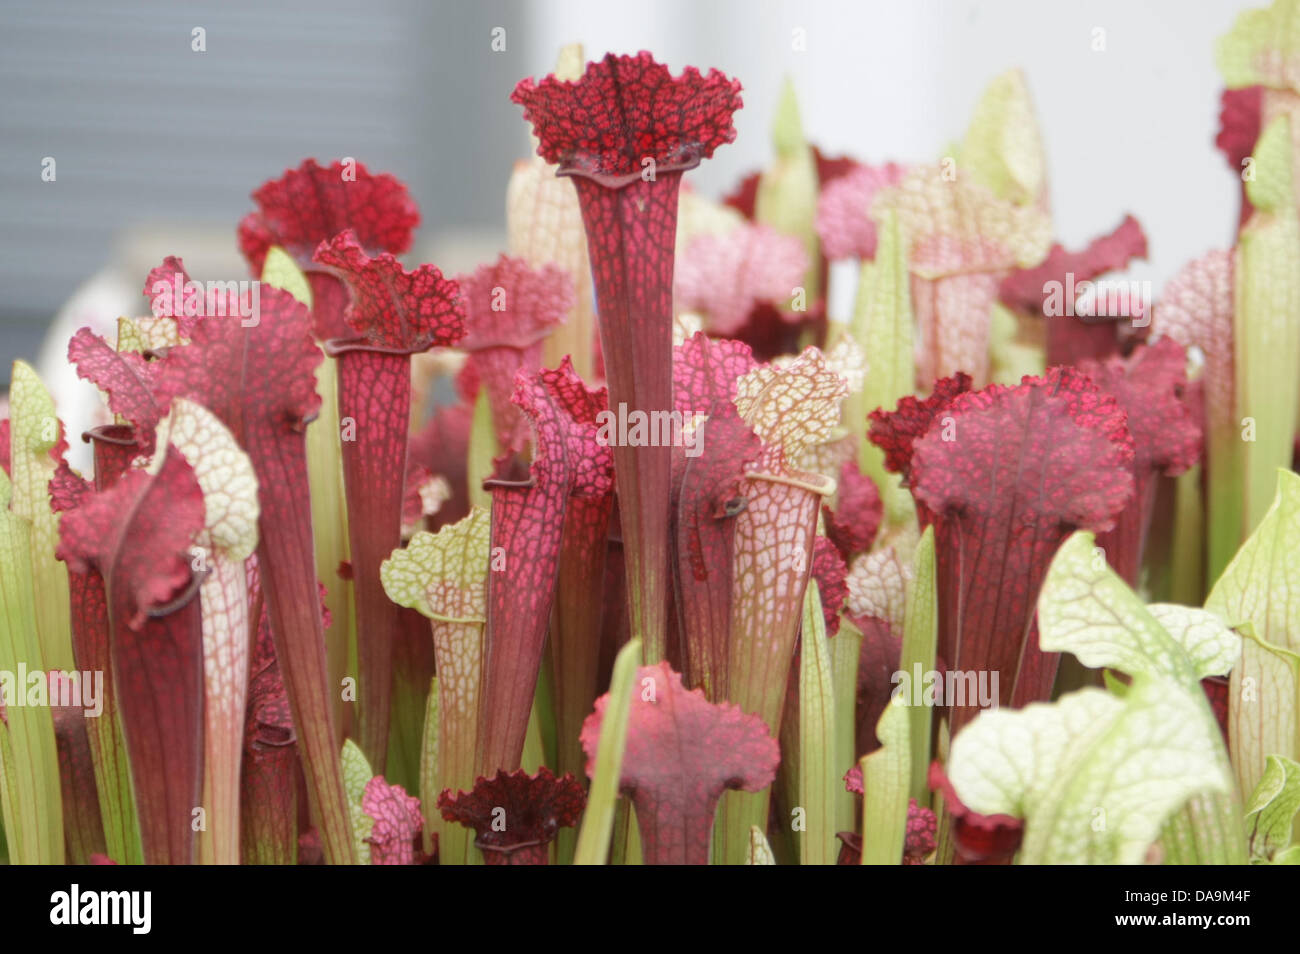 London, UK. 8. Juli 2013. Sarracenia Kannenpflanzen in der The Floral Festzelt RHS Hampton Court Palace Flower Show ausgestellt. Bildnachweis: Martyn Wheatley/Alamy Live News Stockfoto